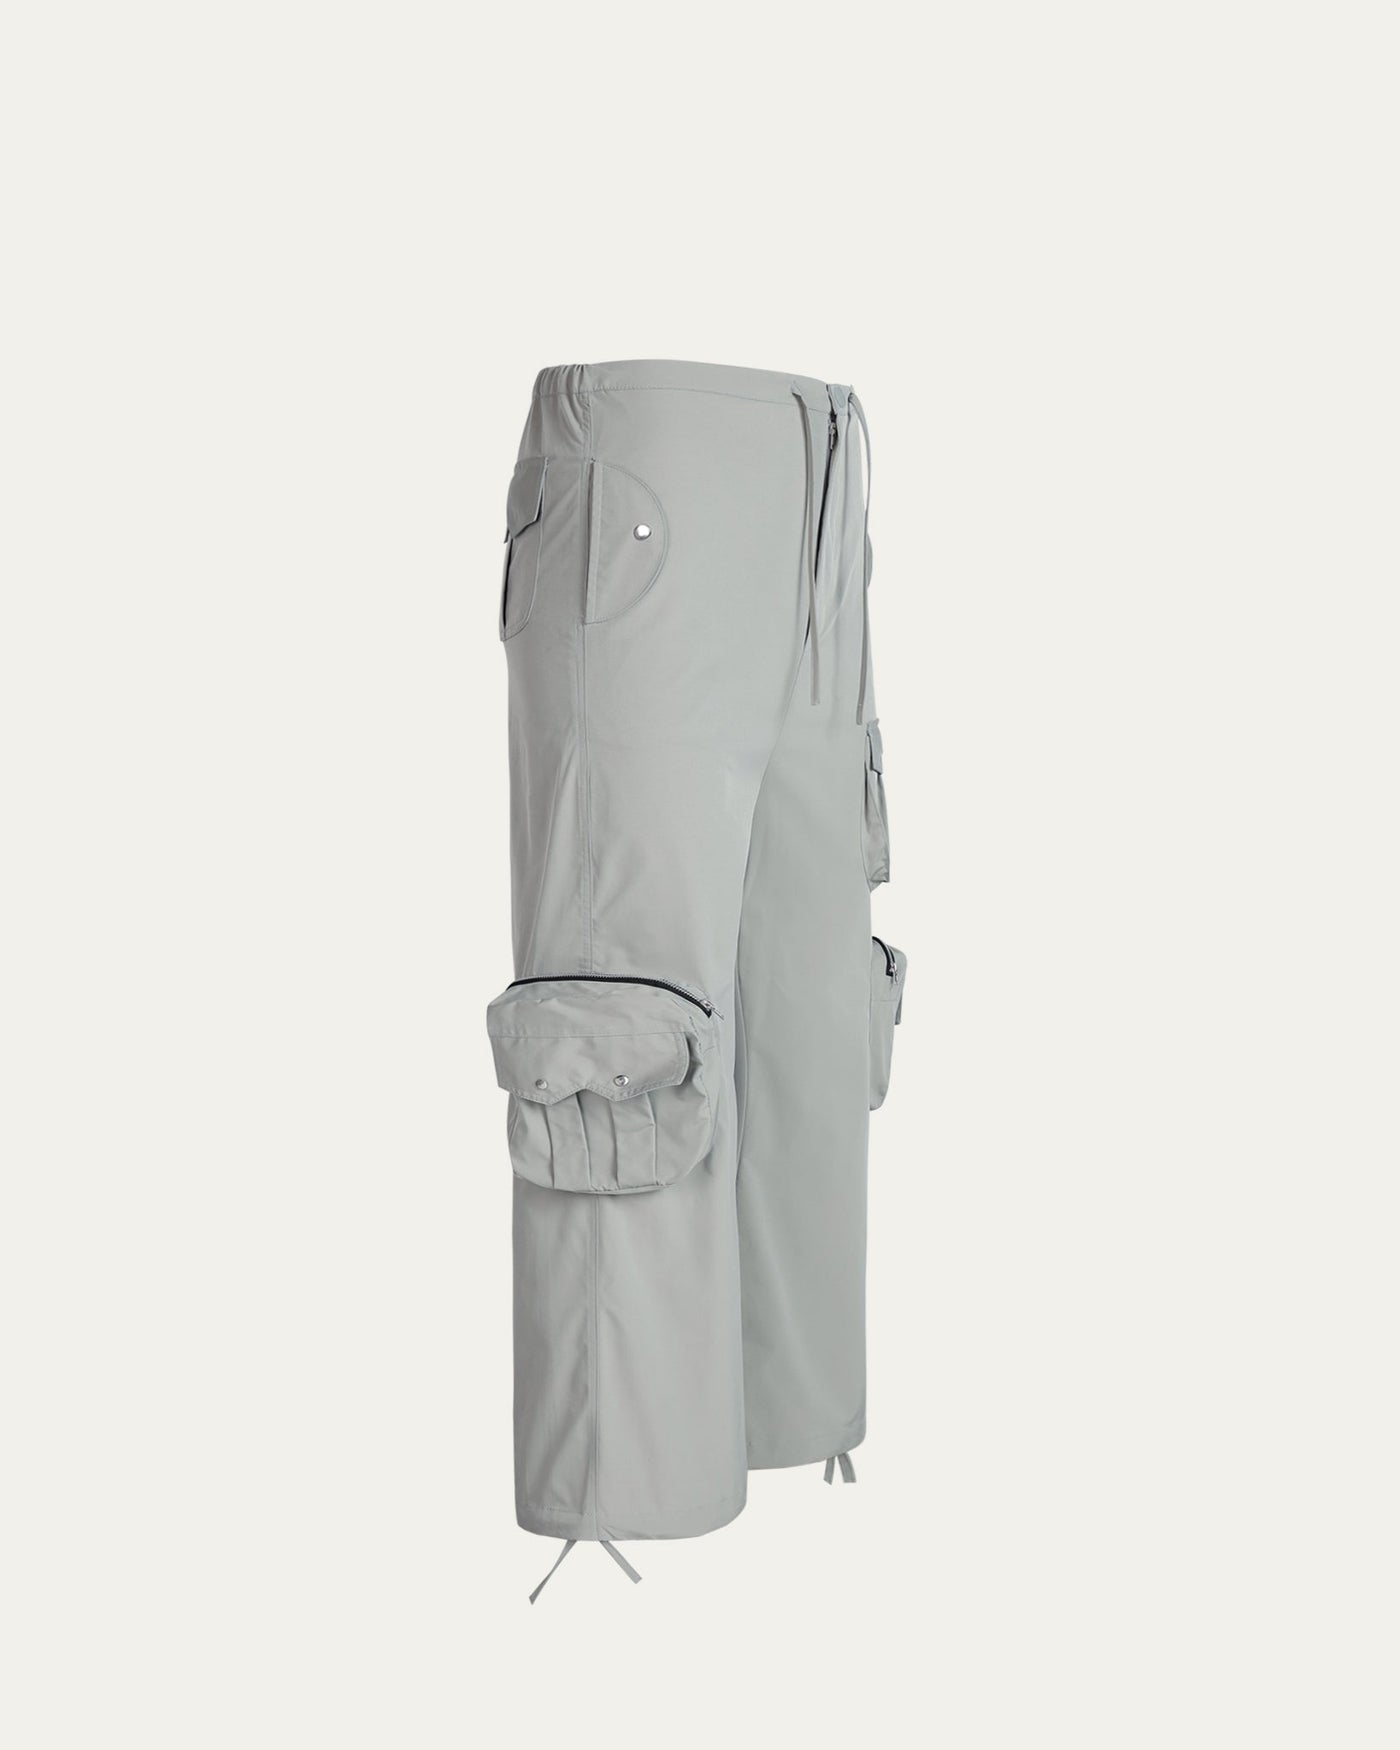 Pocket Parachute Pants - Light Grey - TOBI